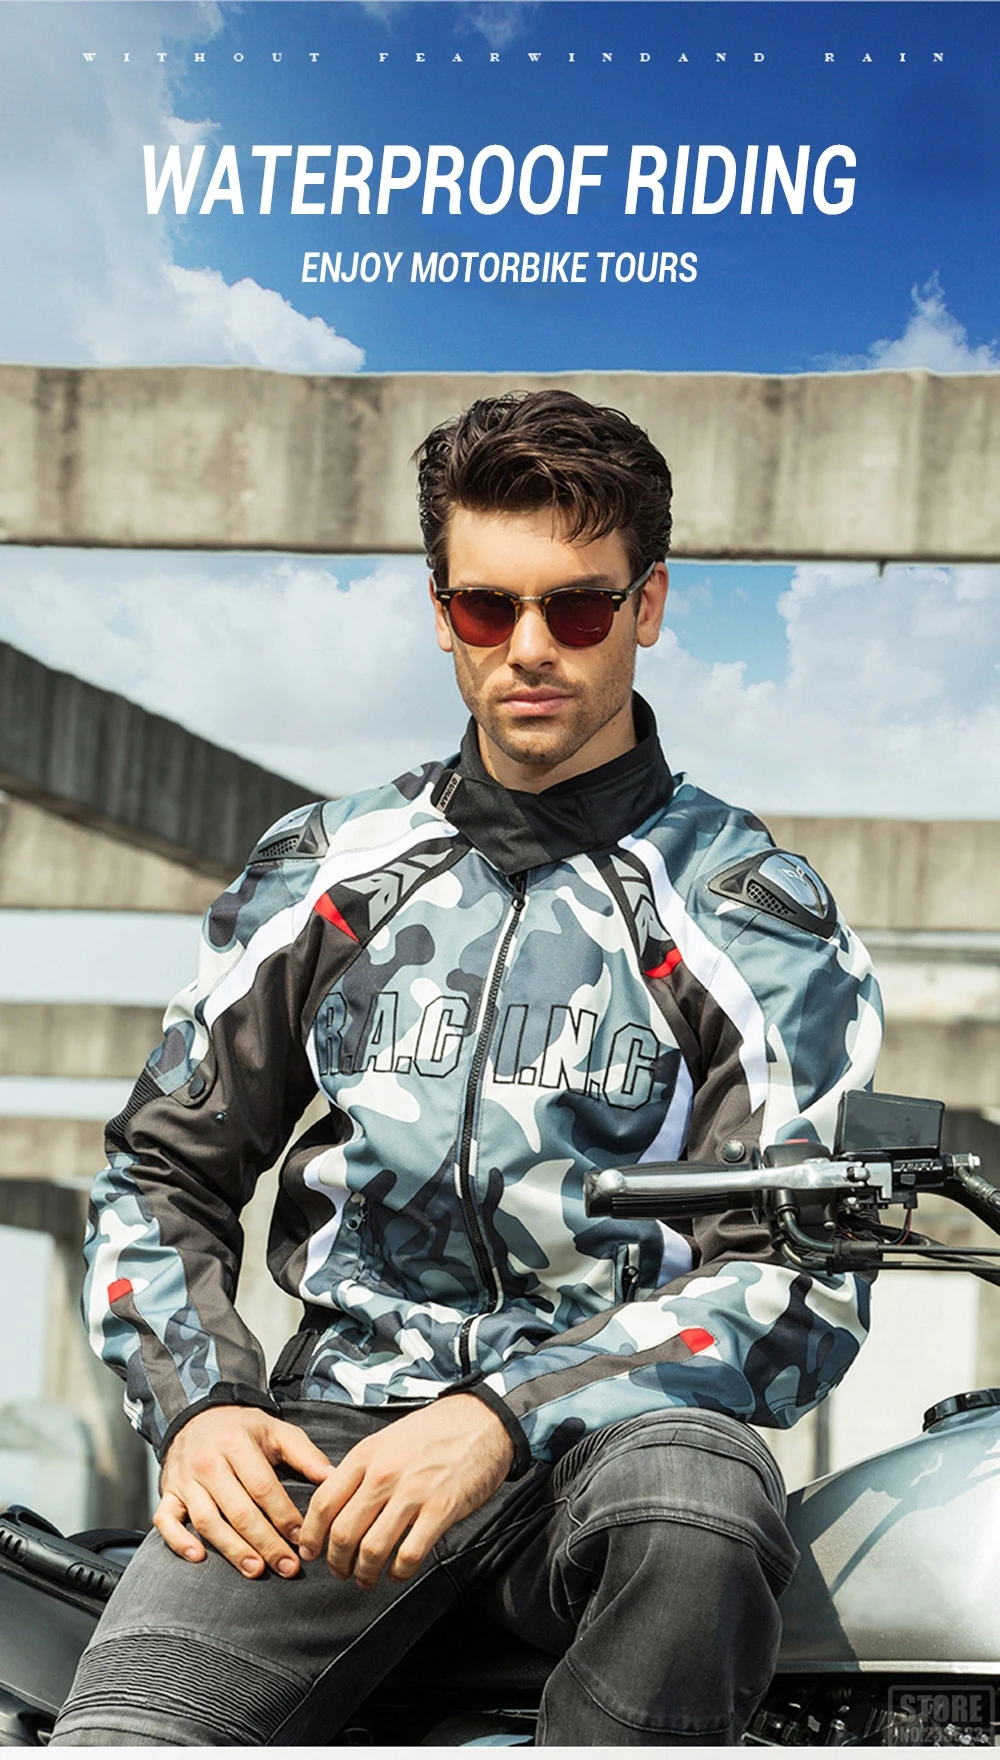 HEROBIKER мотоциклетная куртка защитная Экипировка для мужчин мотокросса гоночная куртка для внедорожных гонок мото одежда мотоциклетная защита